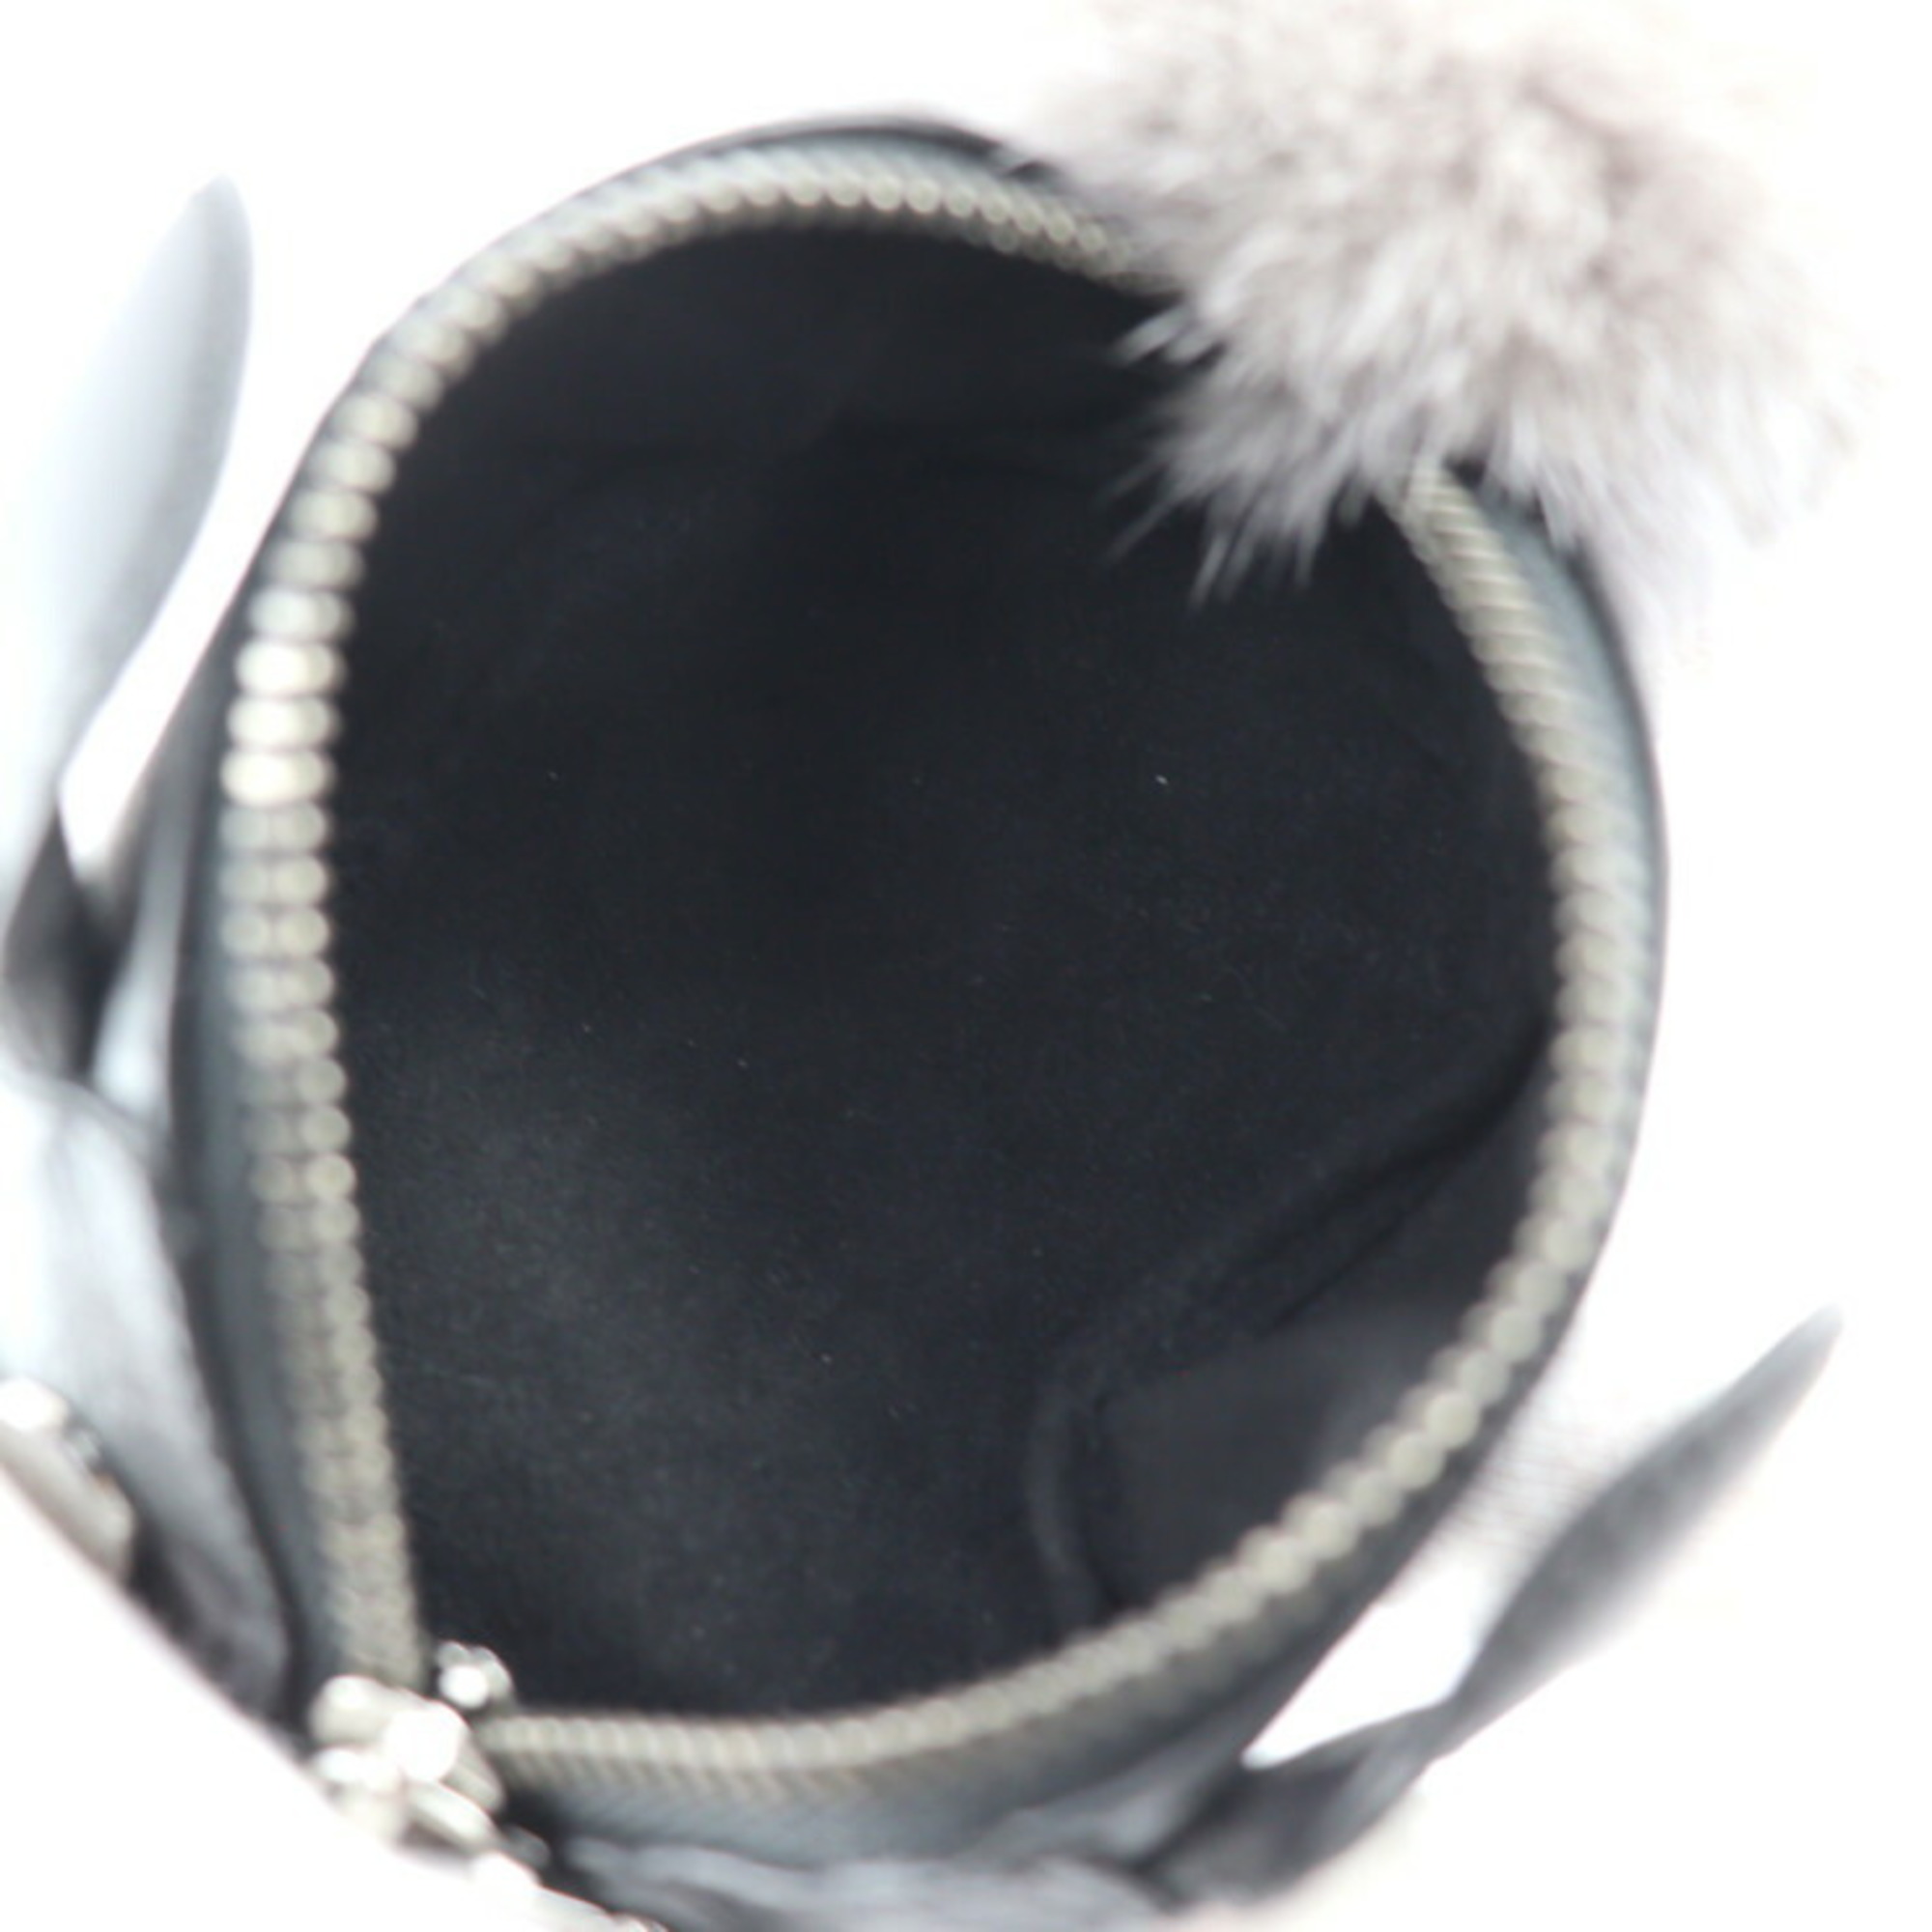 LOUIS VUITTON Pouch LV Chin Chilla Keychain M00962 Monogram Eclipse Leather Fur Black Gray Silver Hardware Coin Case Bag Charm Animal Vuitton